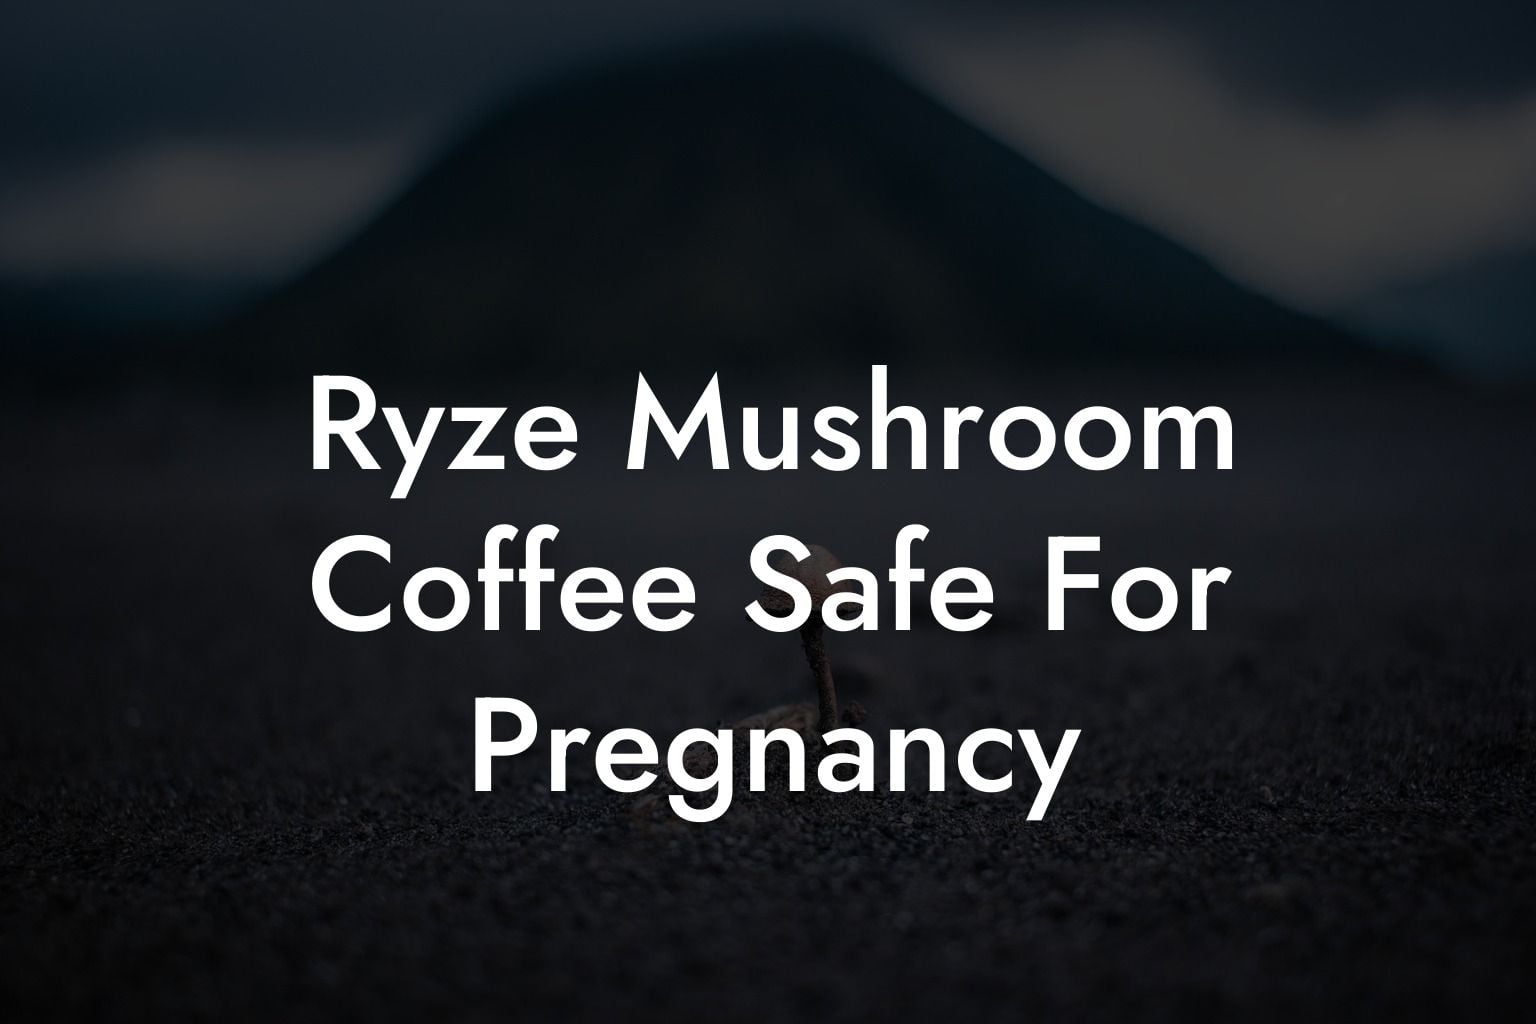 Ryze Mushroom Coffee Safe For Pregnancy